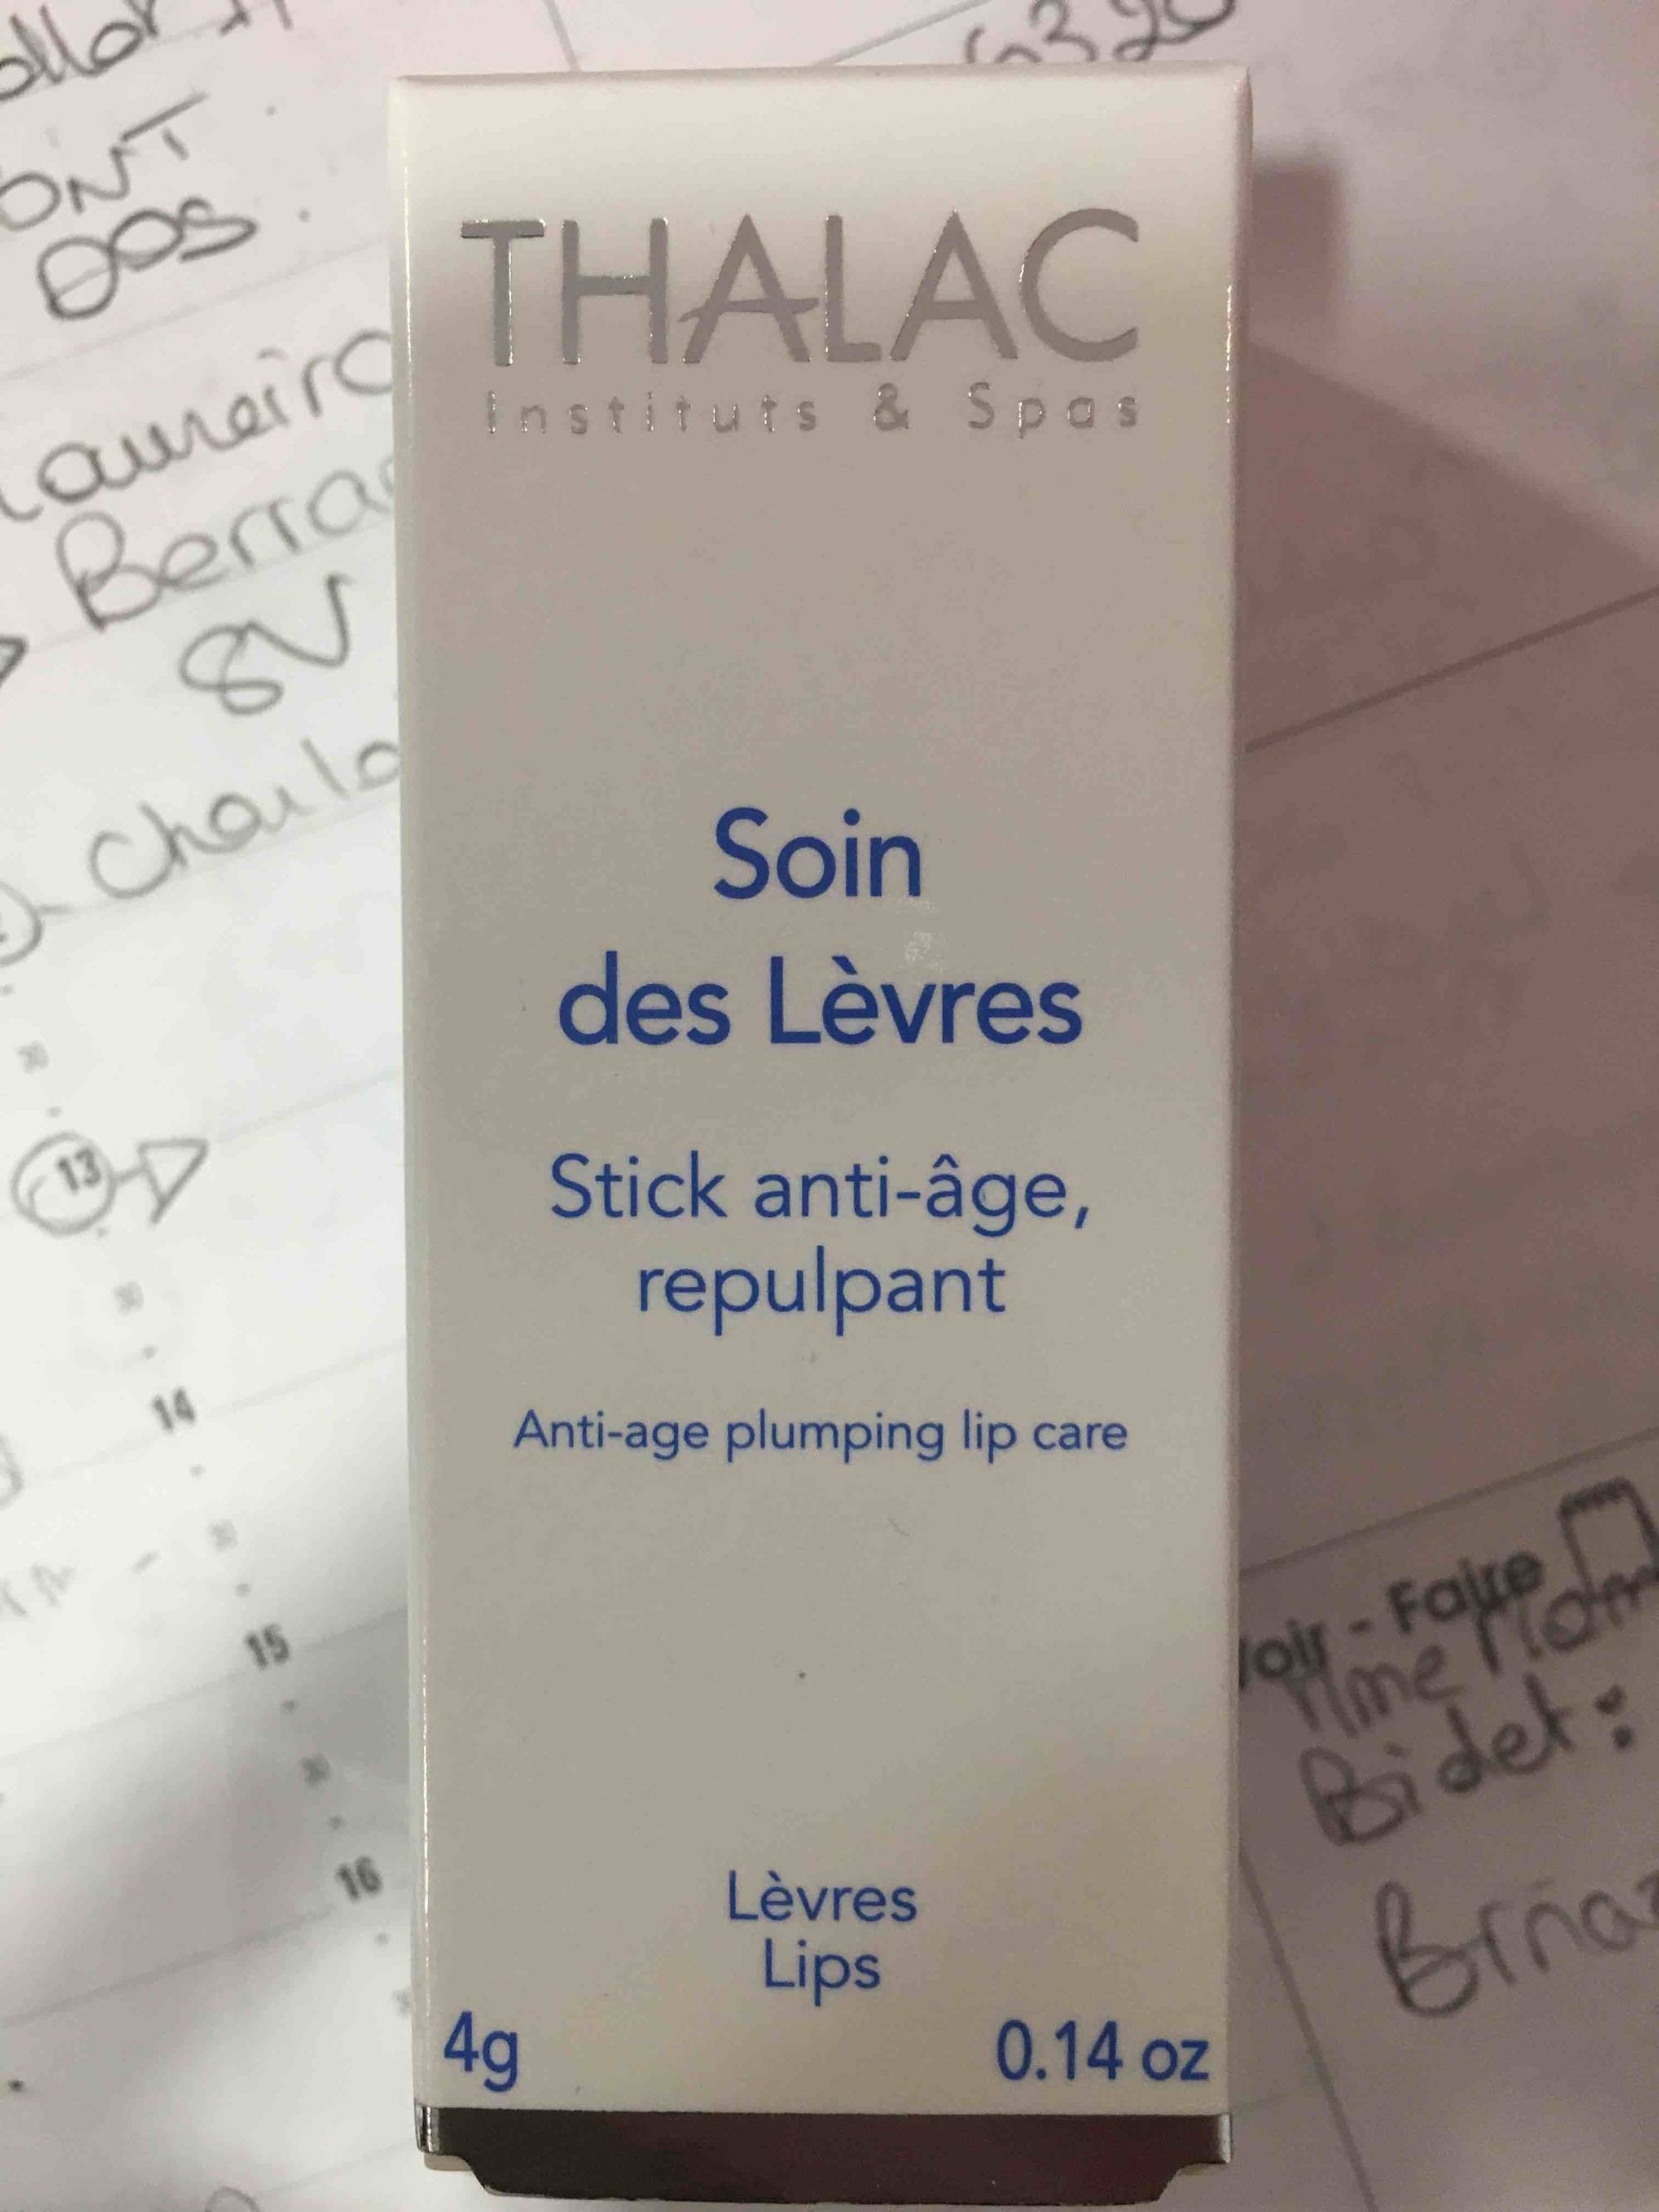 THALAC - Soin des lèvres - Stick anti-âge repulpant